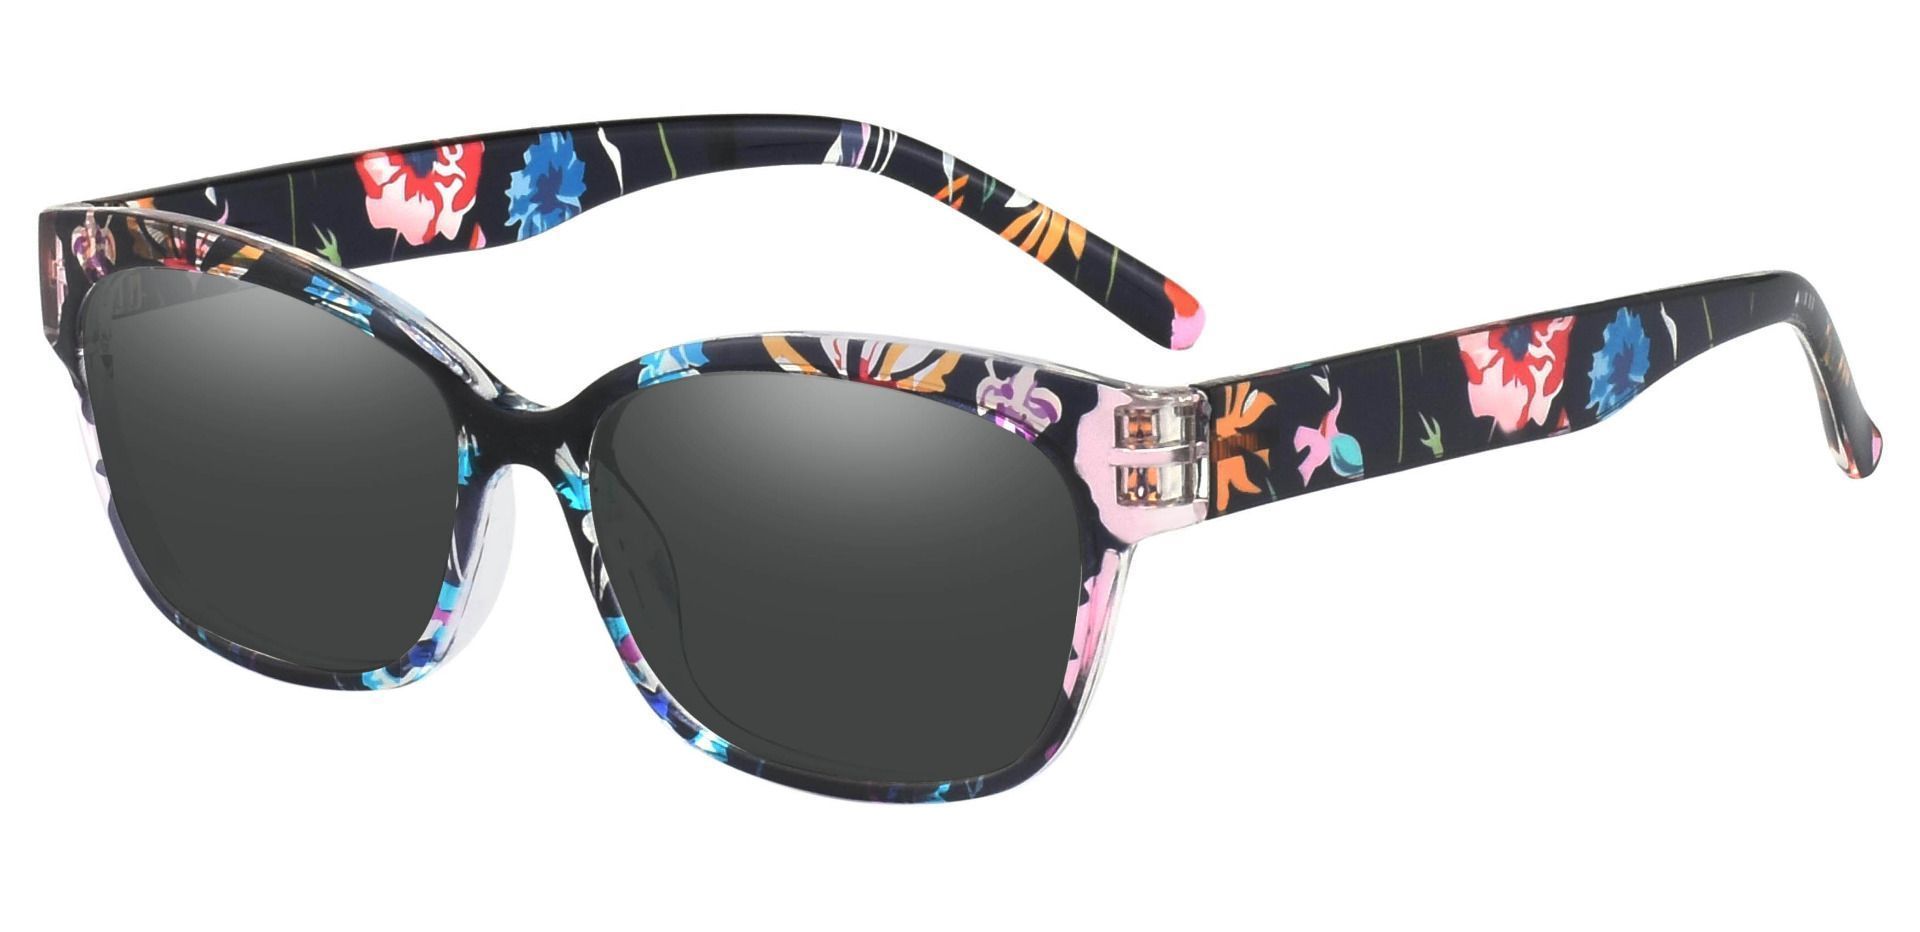 Adele Cat-Eye Prescription Sunglasses - Floral Frame With Gray Lenses